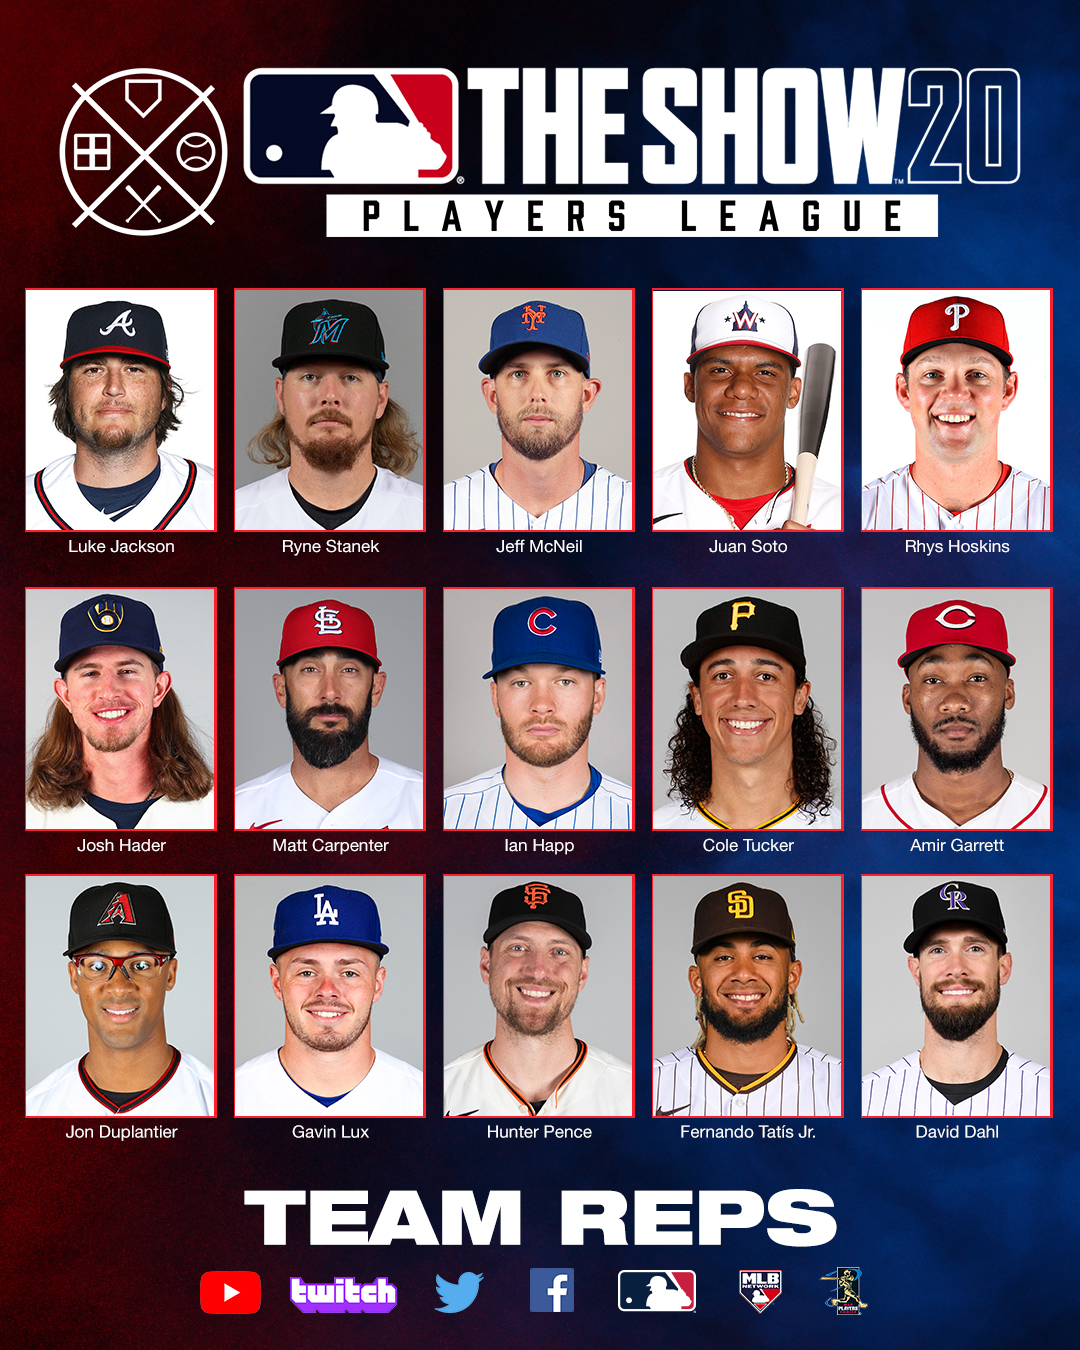 1/30 MLB Team Design Challenge, the Philadelphia Phillies